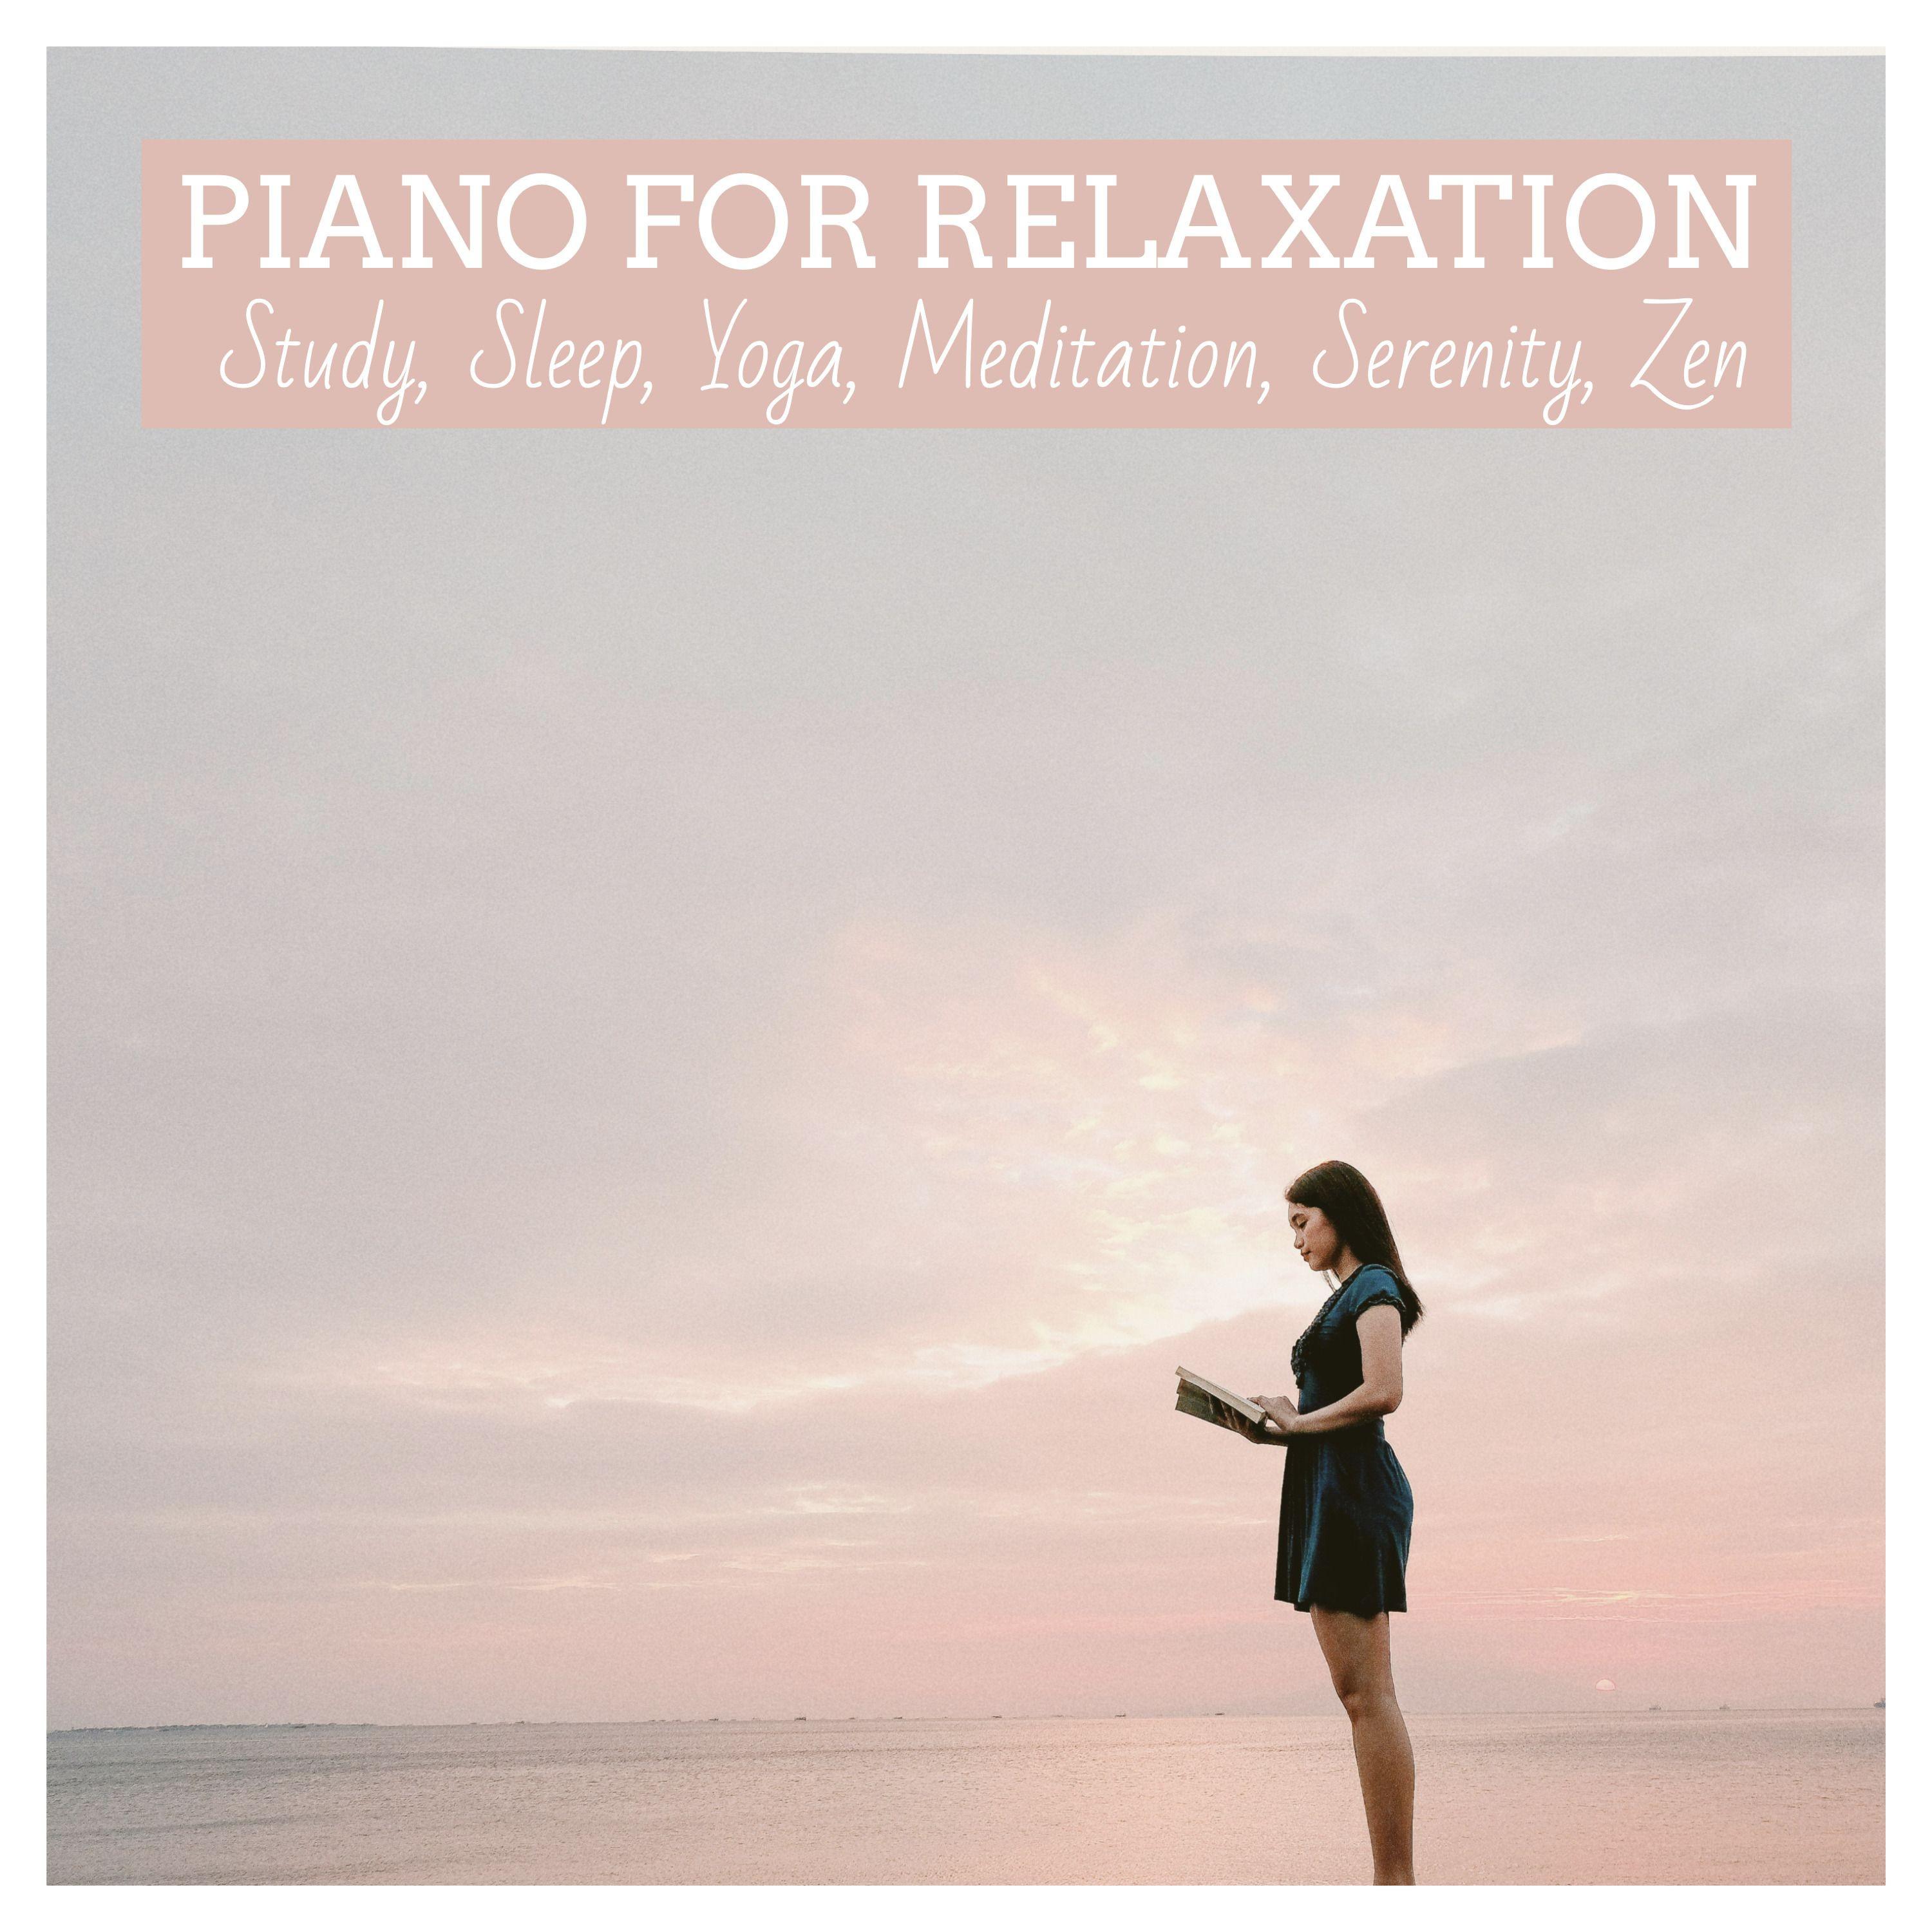 Piano for Relaxation, Study, Sleep, Yoga, Meditation, Serenity, Zen